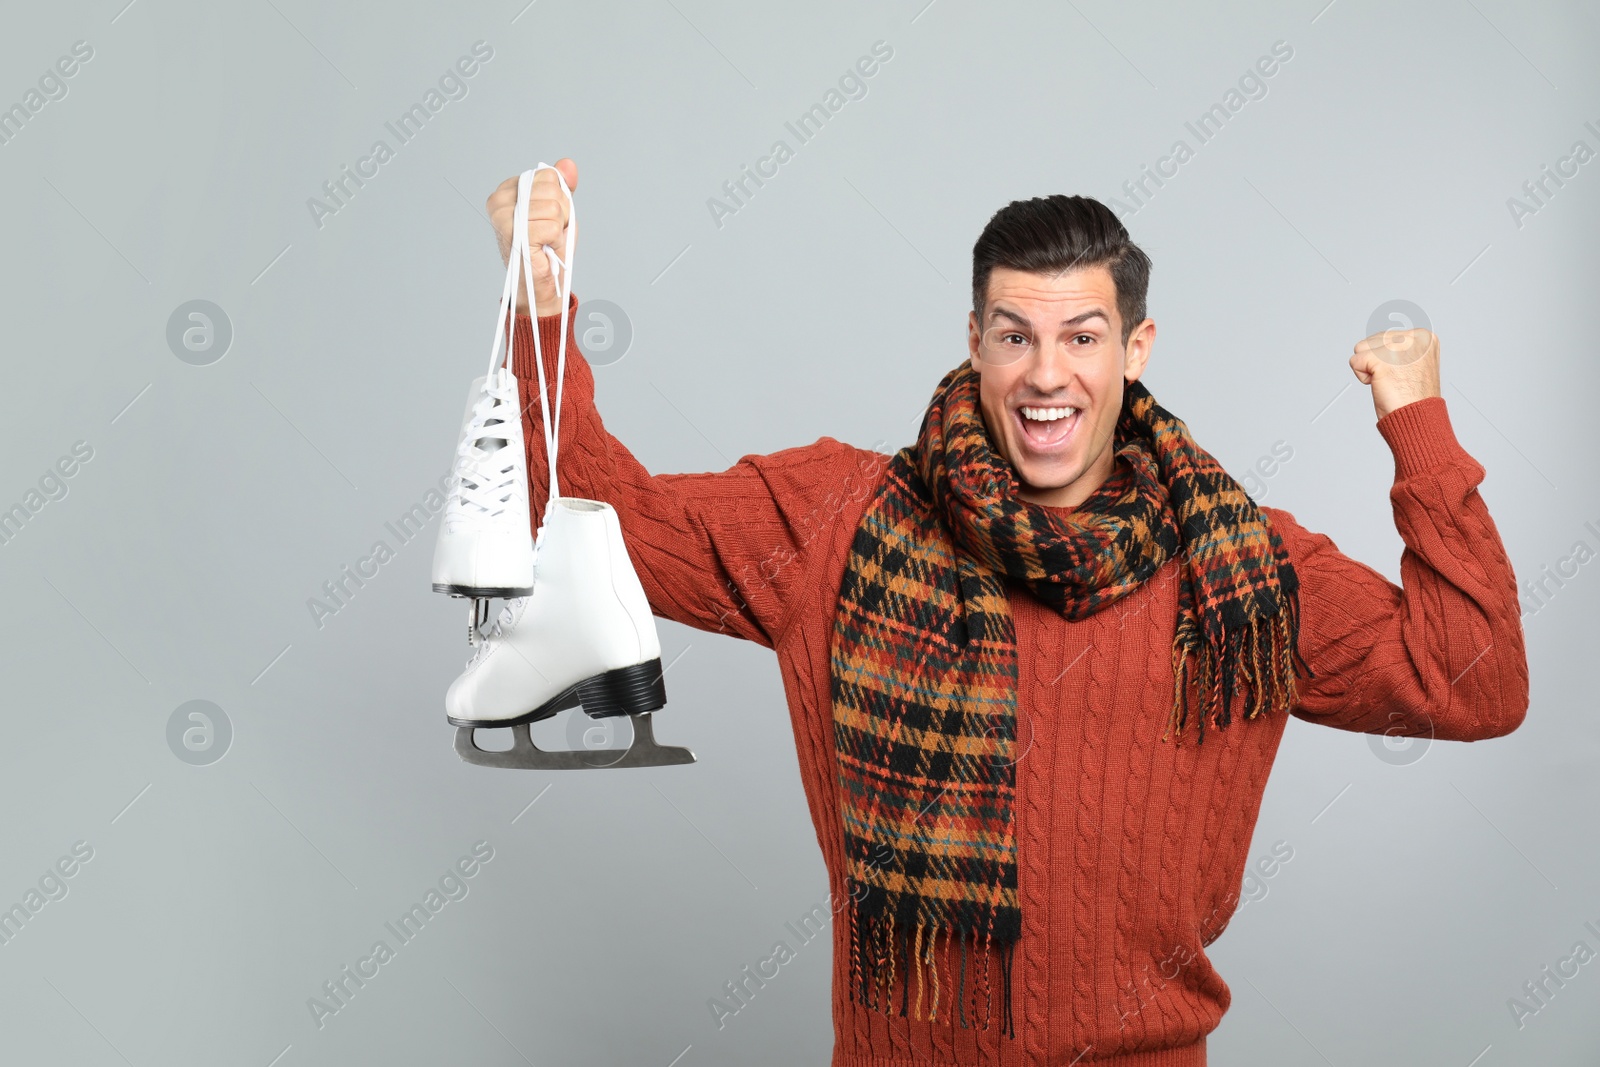 Photo of Emotional man with ice skates on grey background